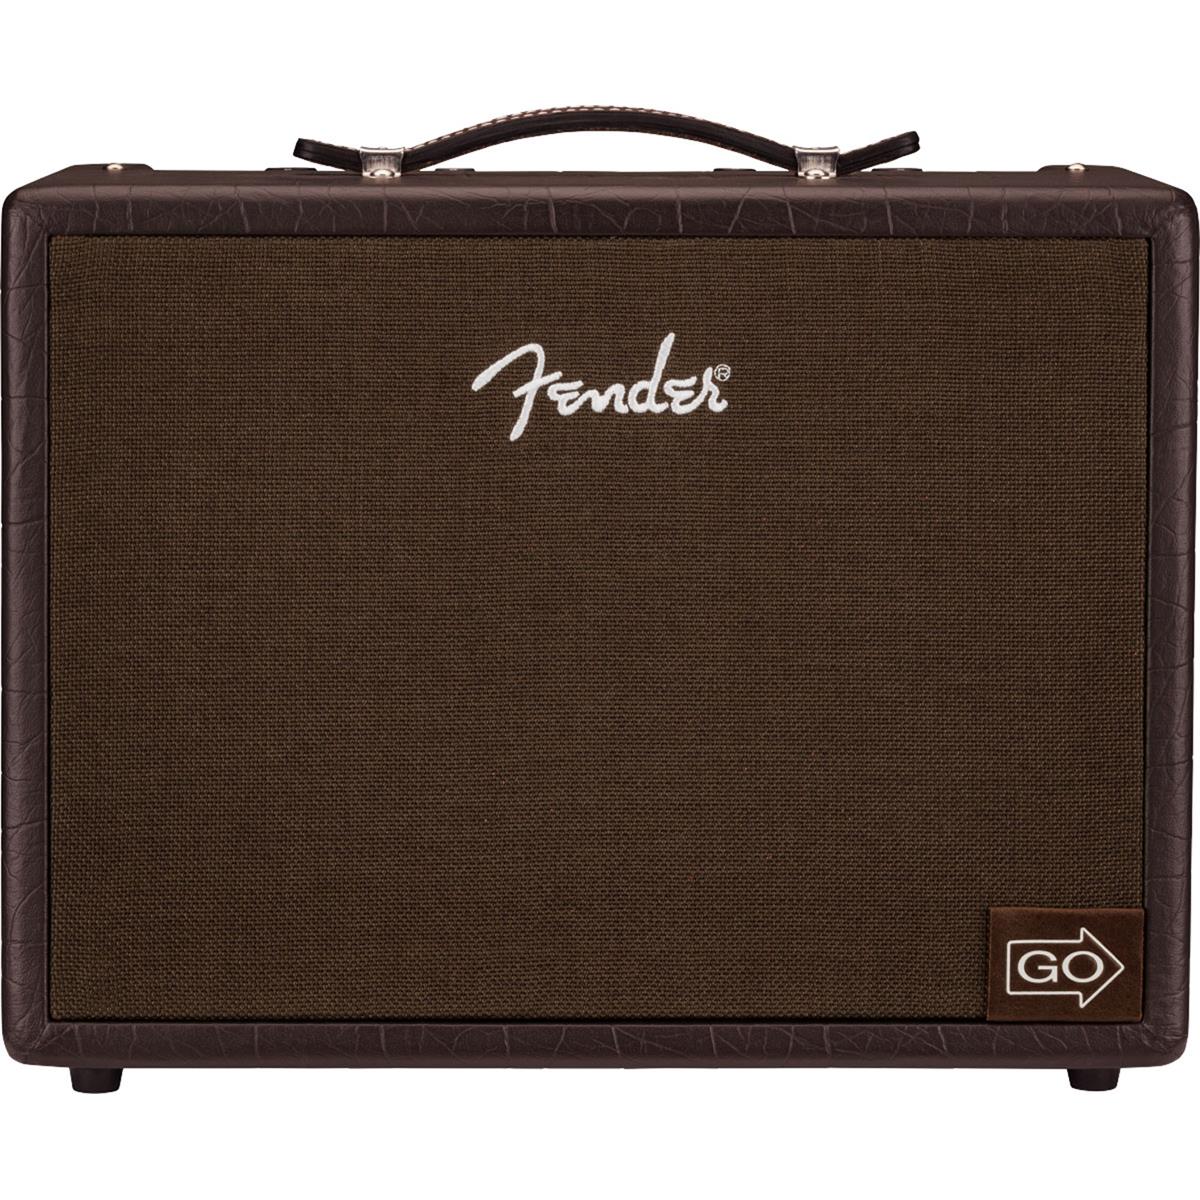 Image of Fender Acoustic Junior GO Amplifier